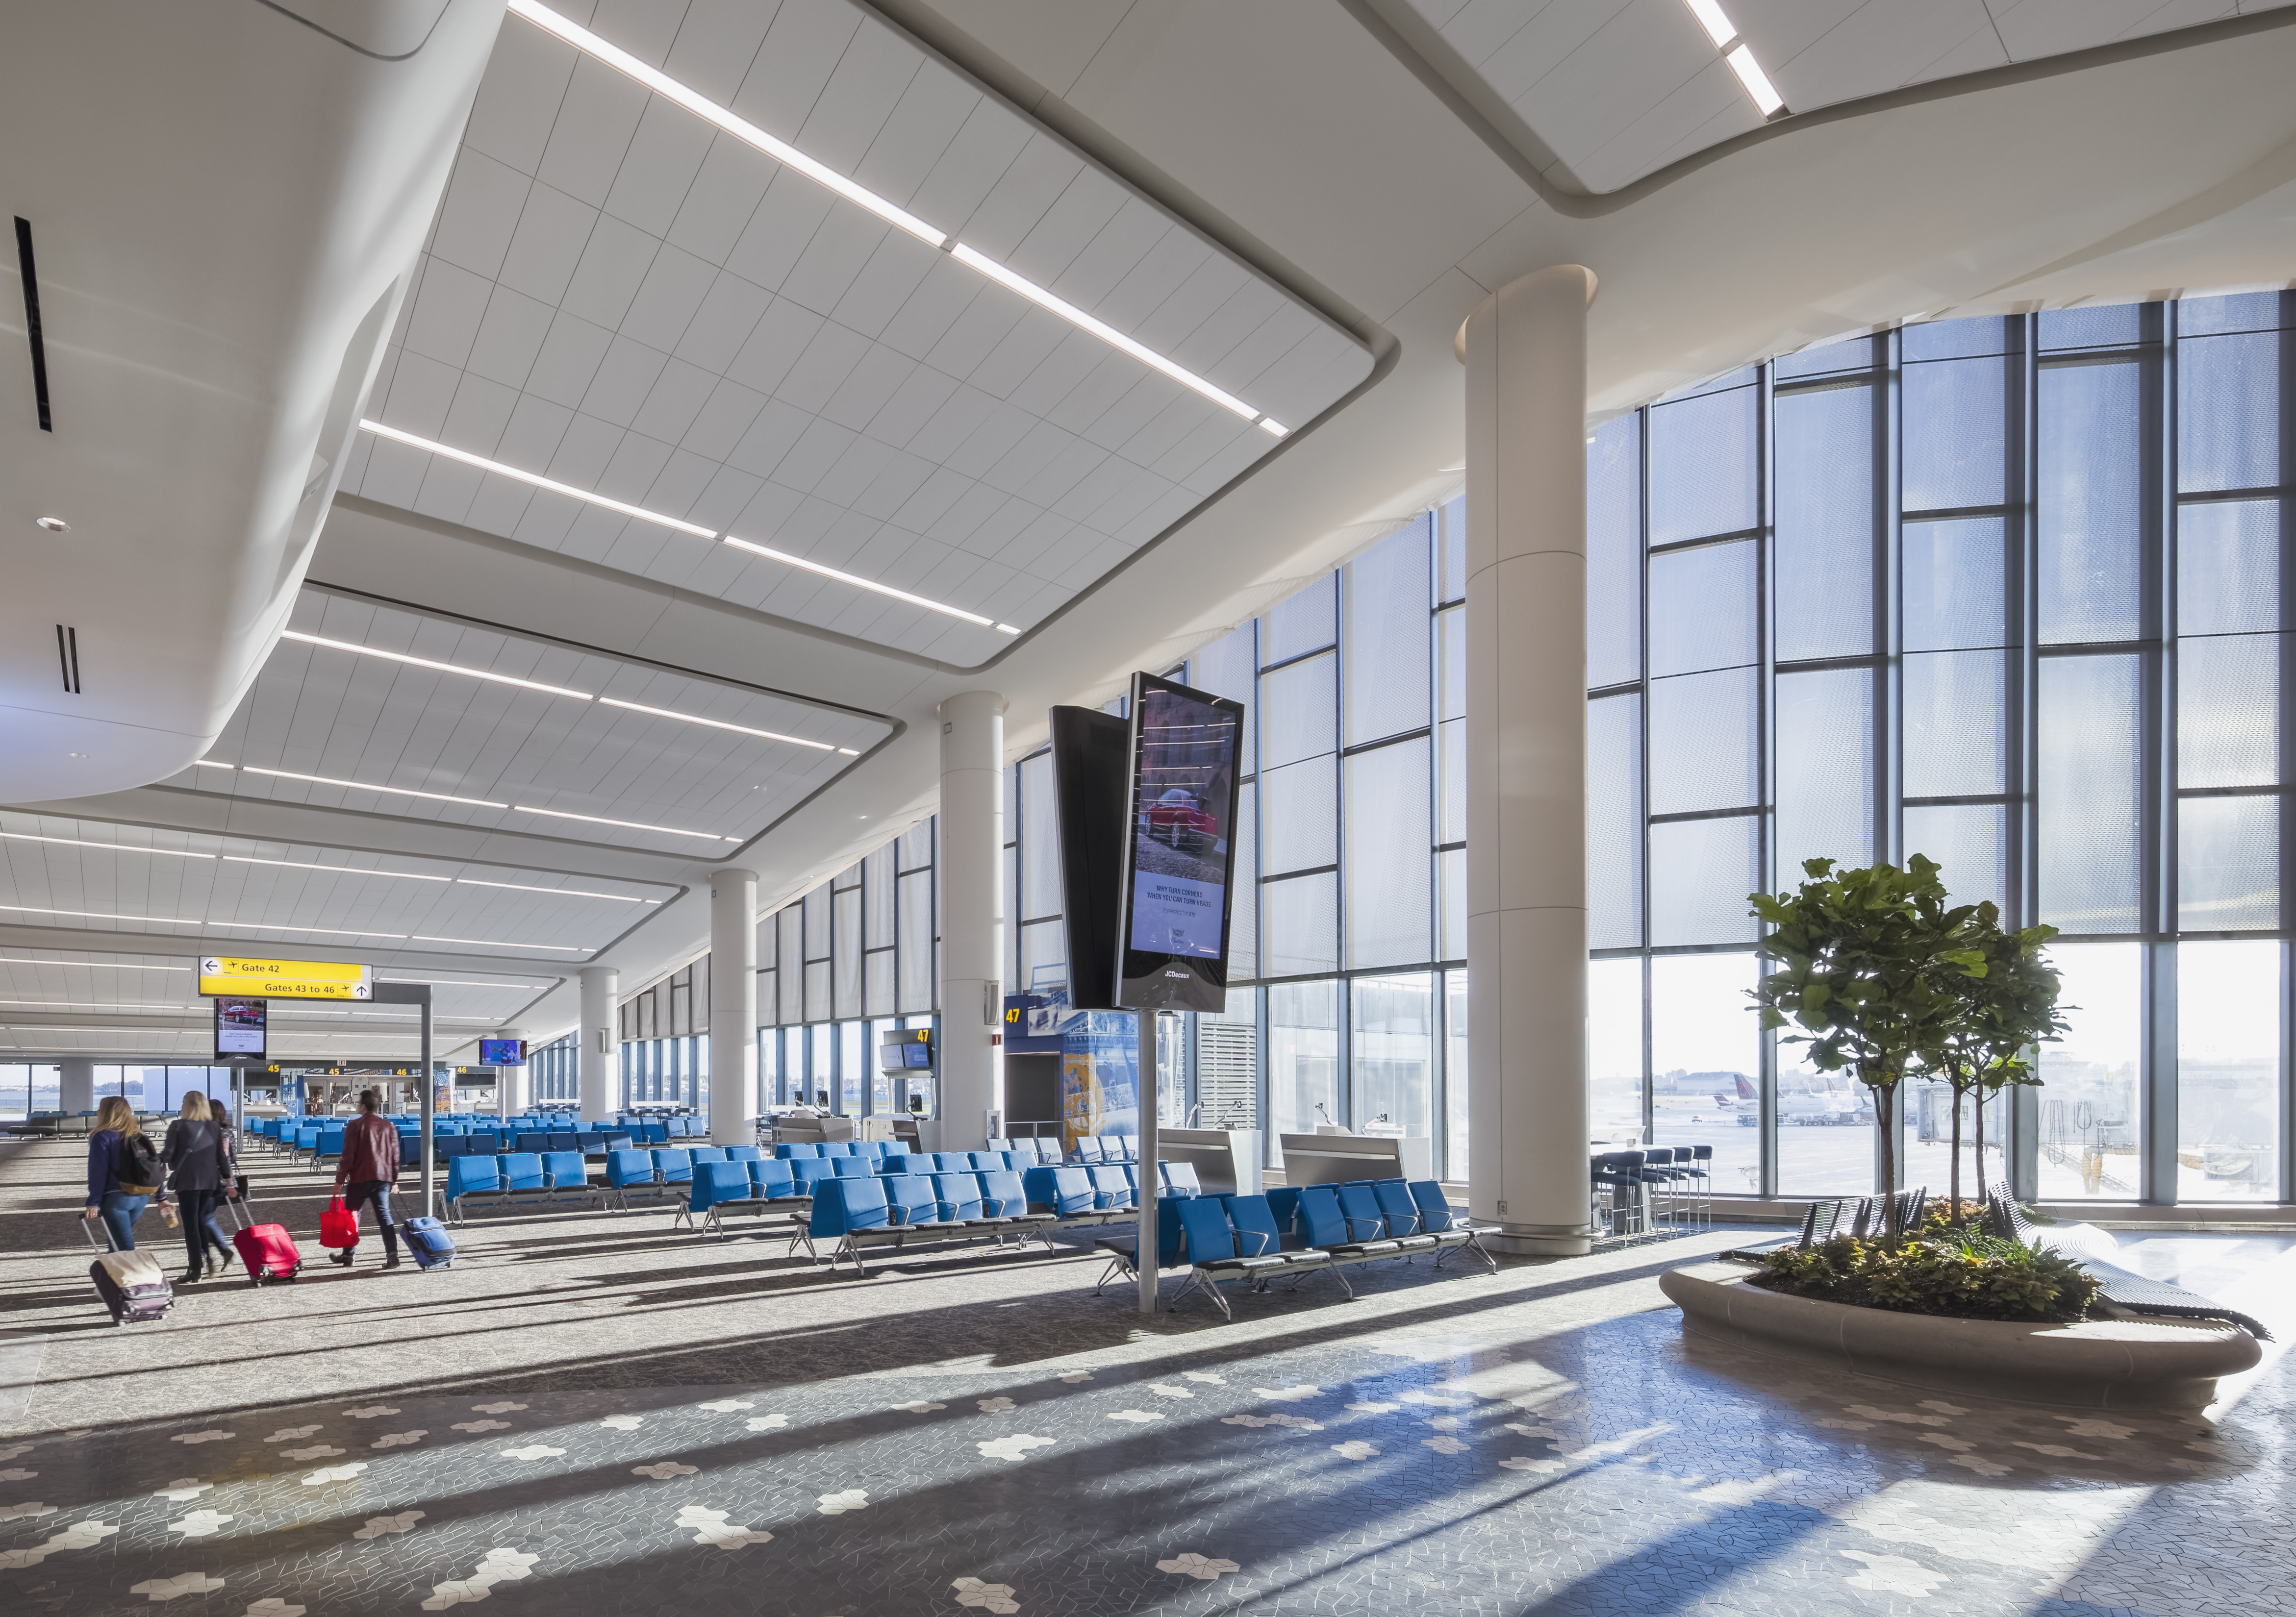 LaGuardia Airport Terminal B, Location: Queens, New York, LaGuardia Gateway Partners